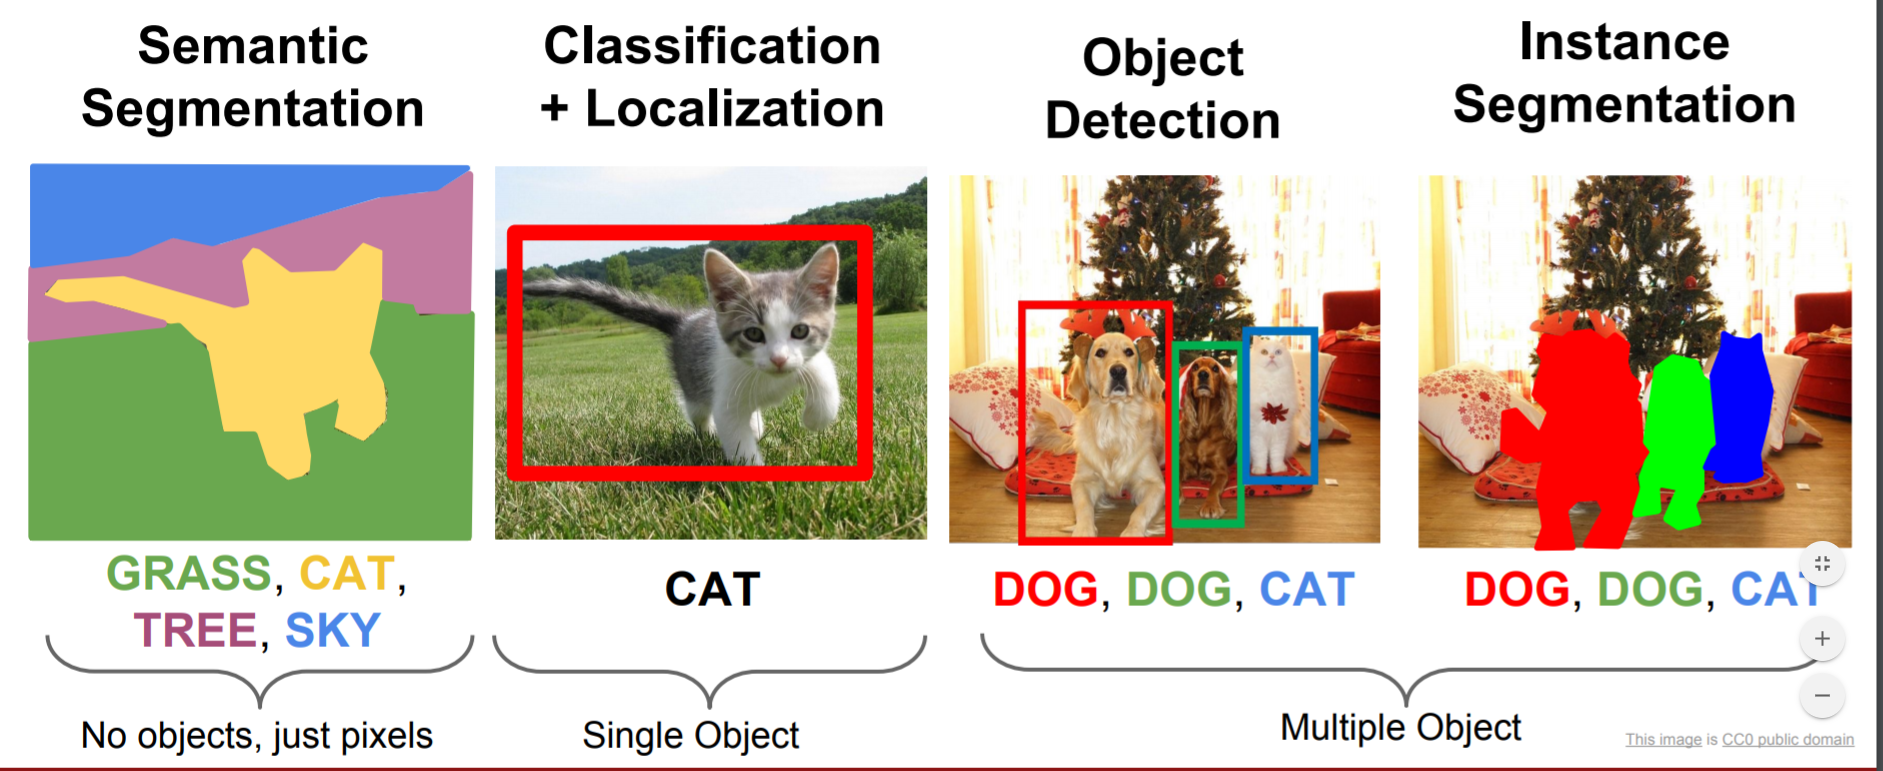 image-segmentation-with-machine-learning-dataflair